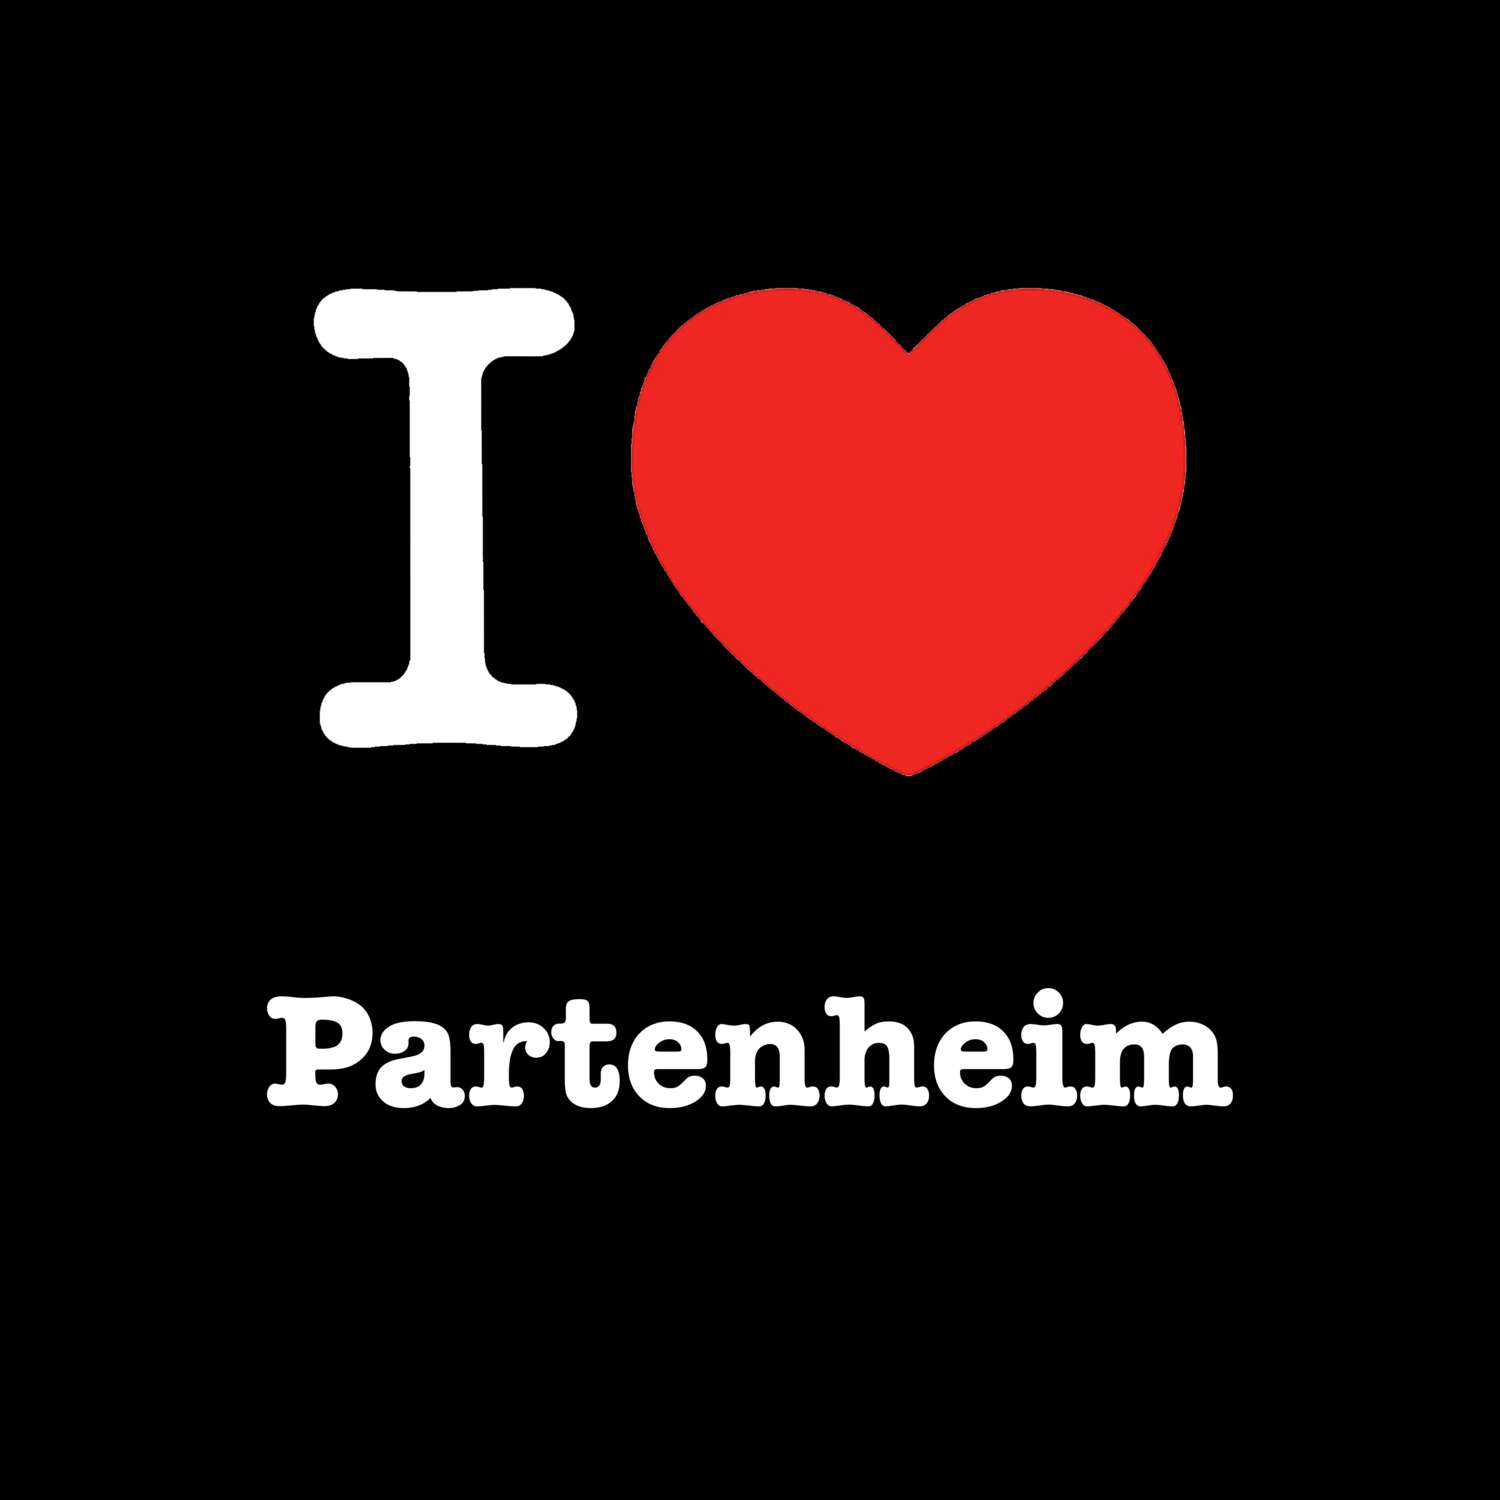 Partenheim T-Shirt »I love«